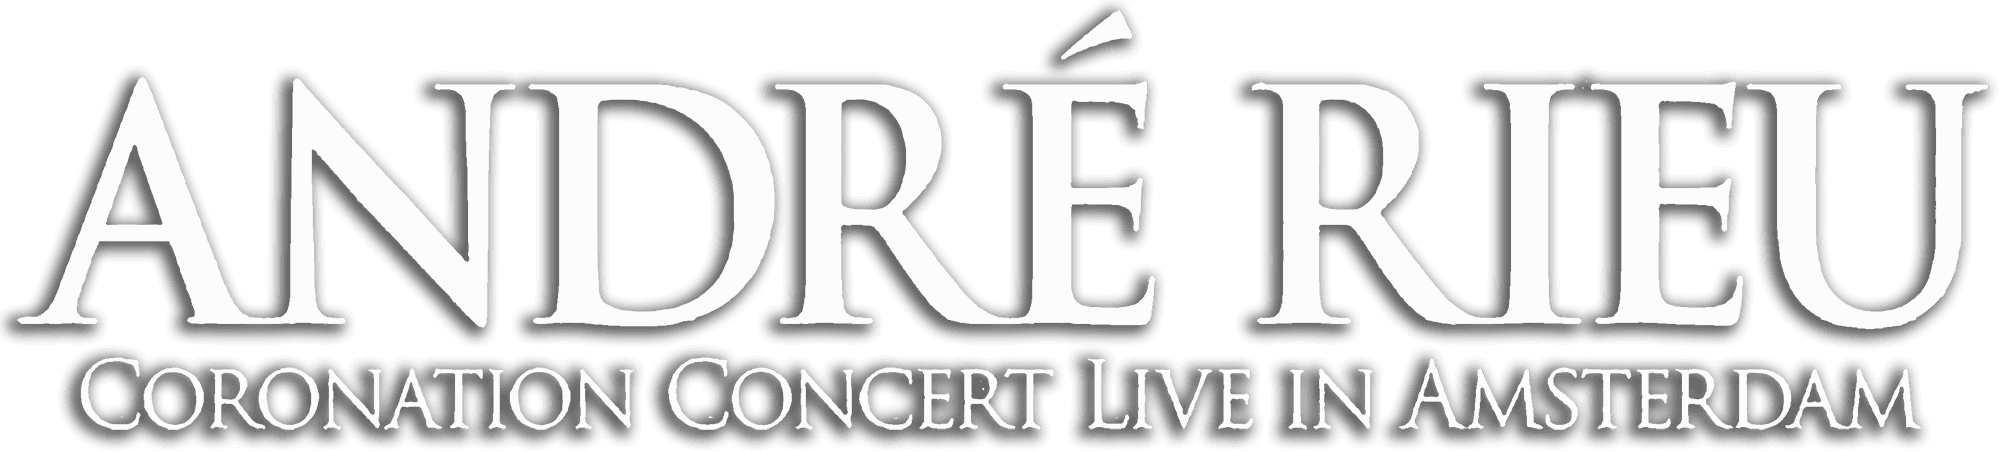 Rieu Royale - André Rieu Coronation Concert Live in Amsterdam logo